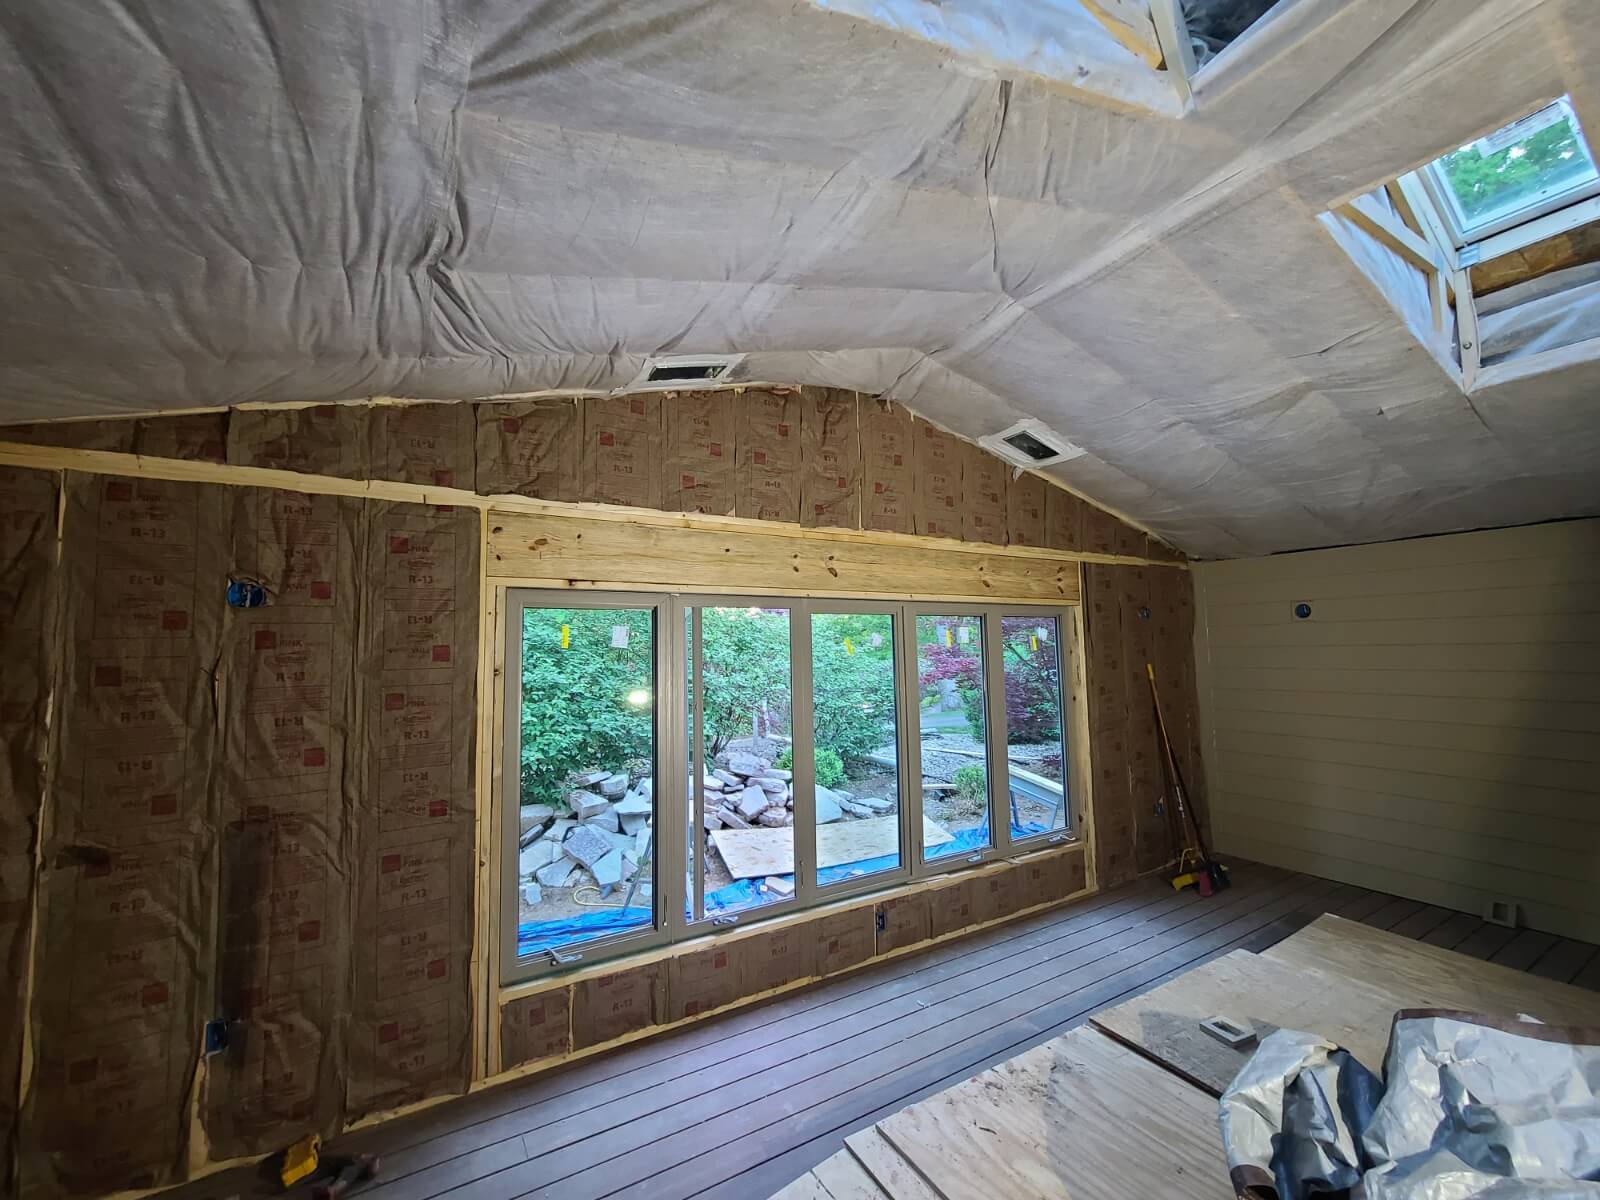 Millbrook attic insulation company